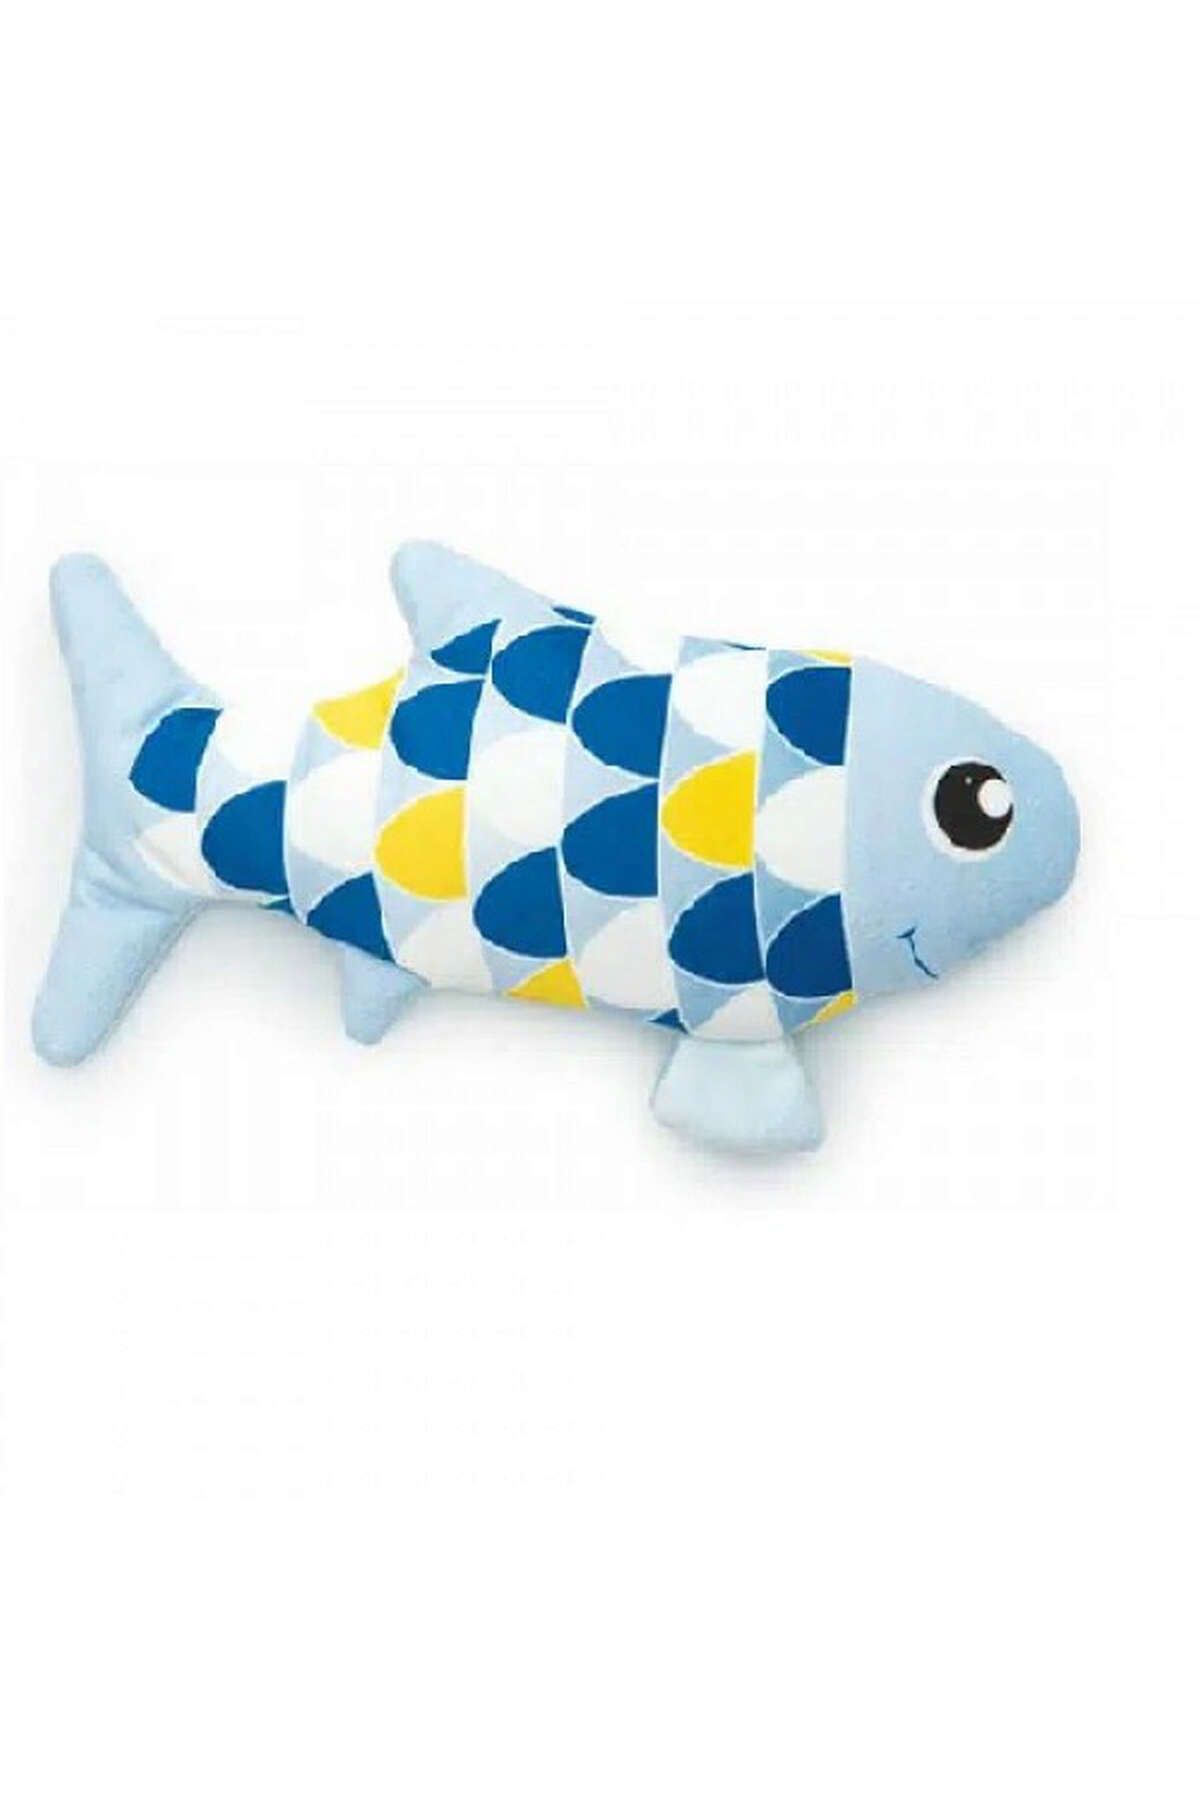 Hagen Catit Groovy Fish Catnipli Kedi Oyuncağı, Mavi 336108